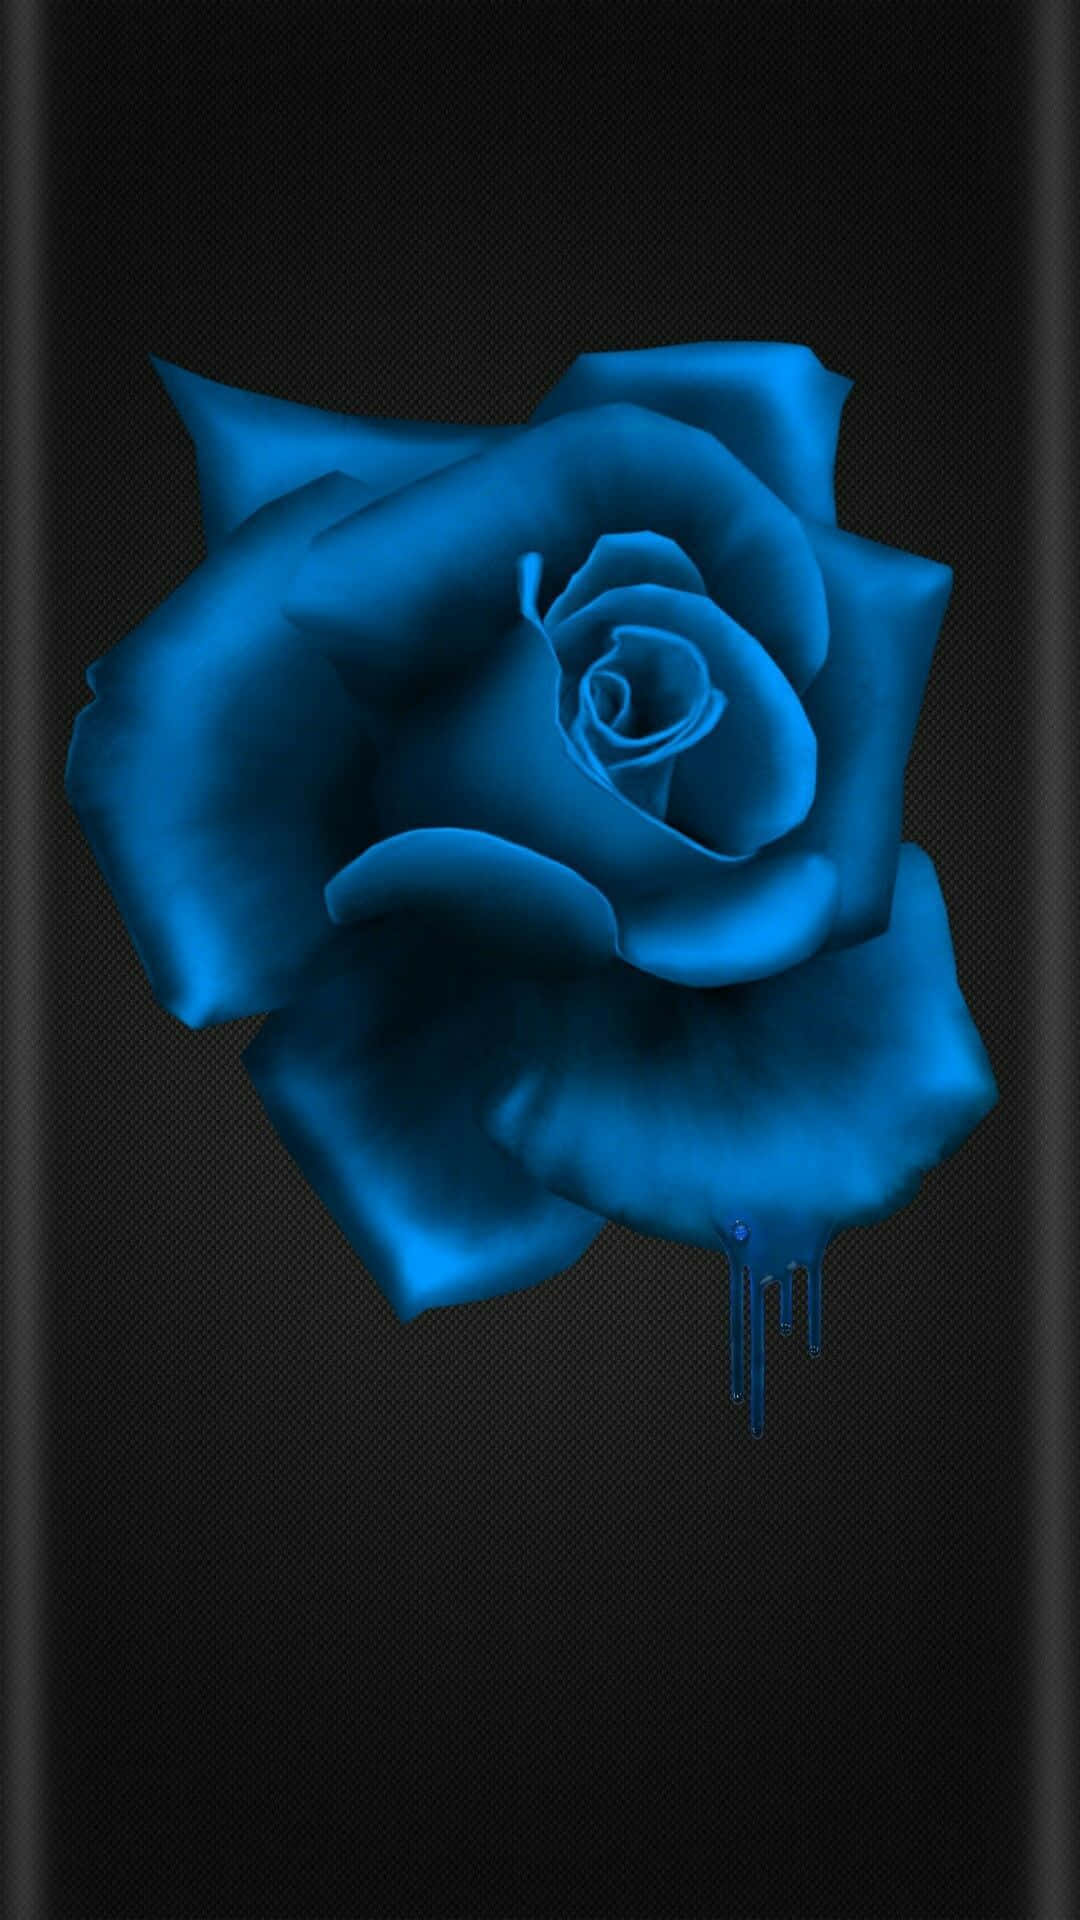 Imagende Una Rosa Sedosa Azul.